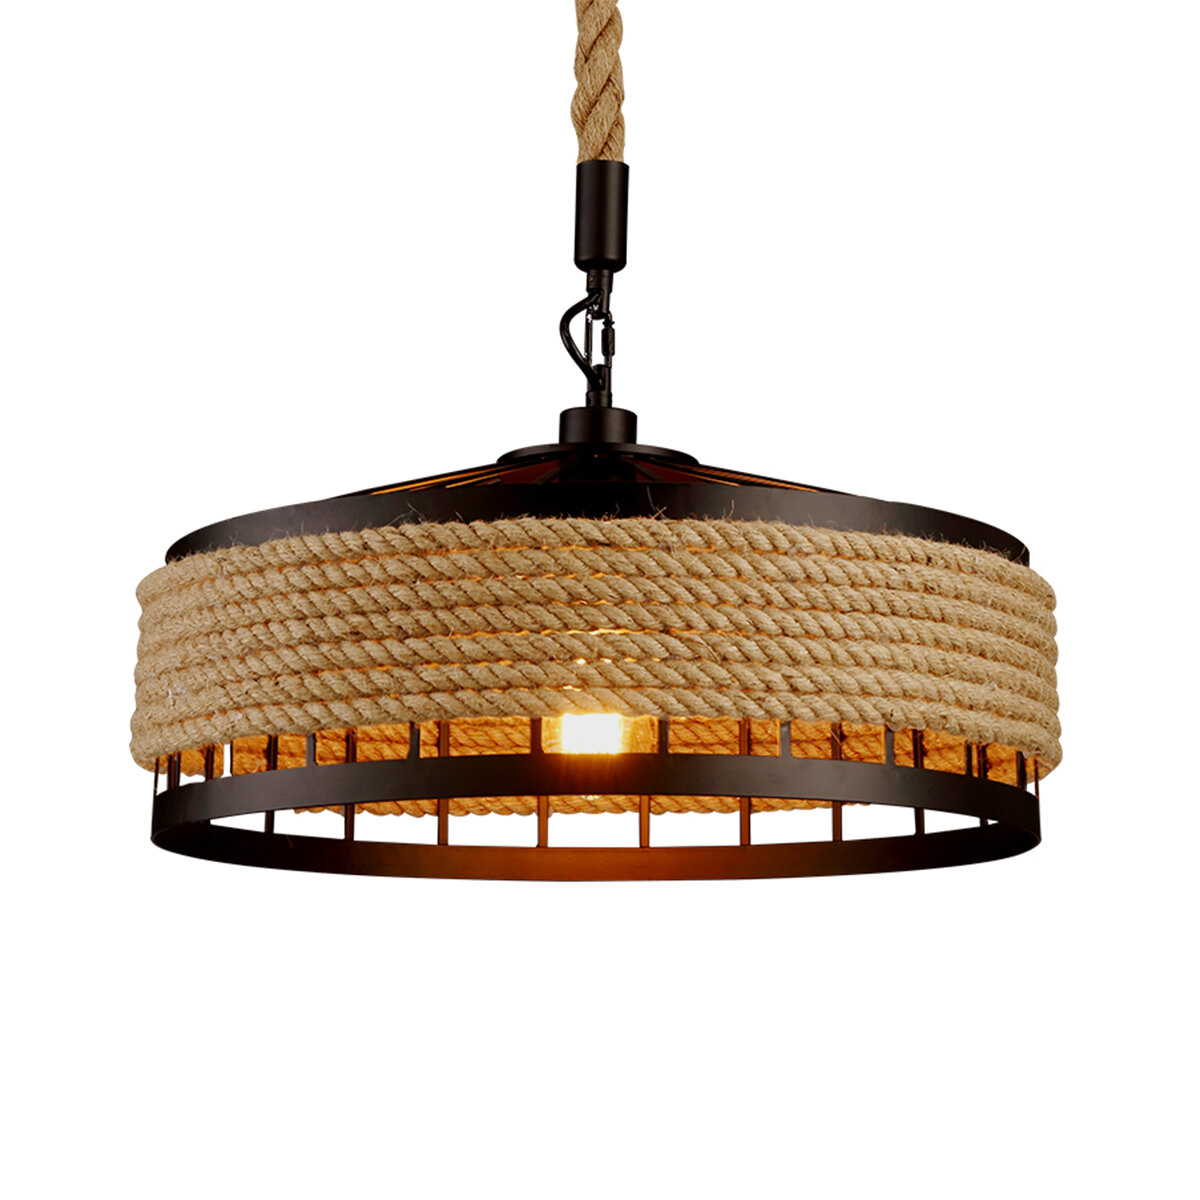 110V E26 Hemp Rope Iron Pendant Light Ceiling Lamp Chandelier Bedroom Fixture Decor Without Bulb